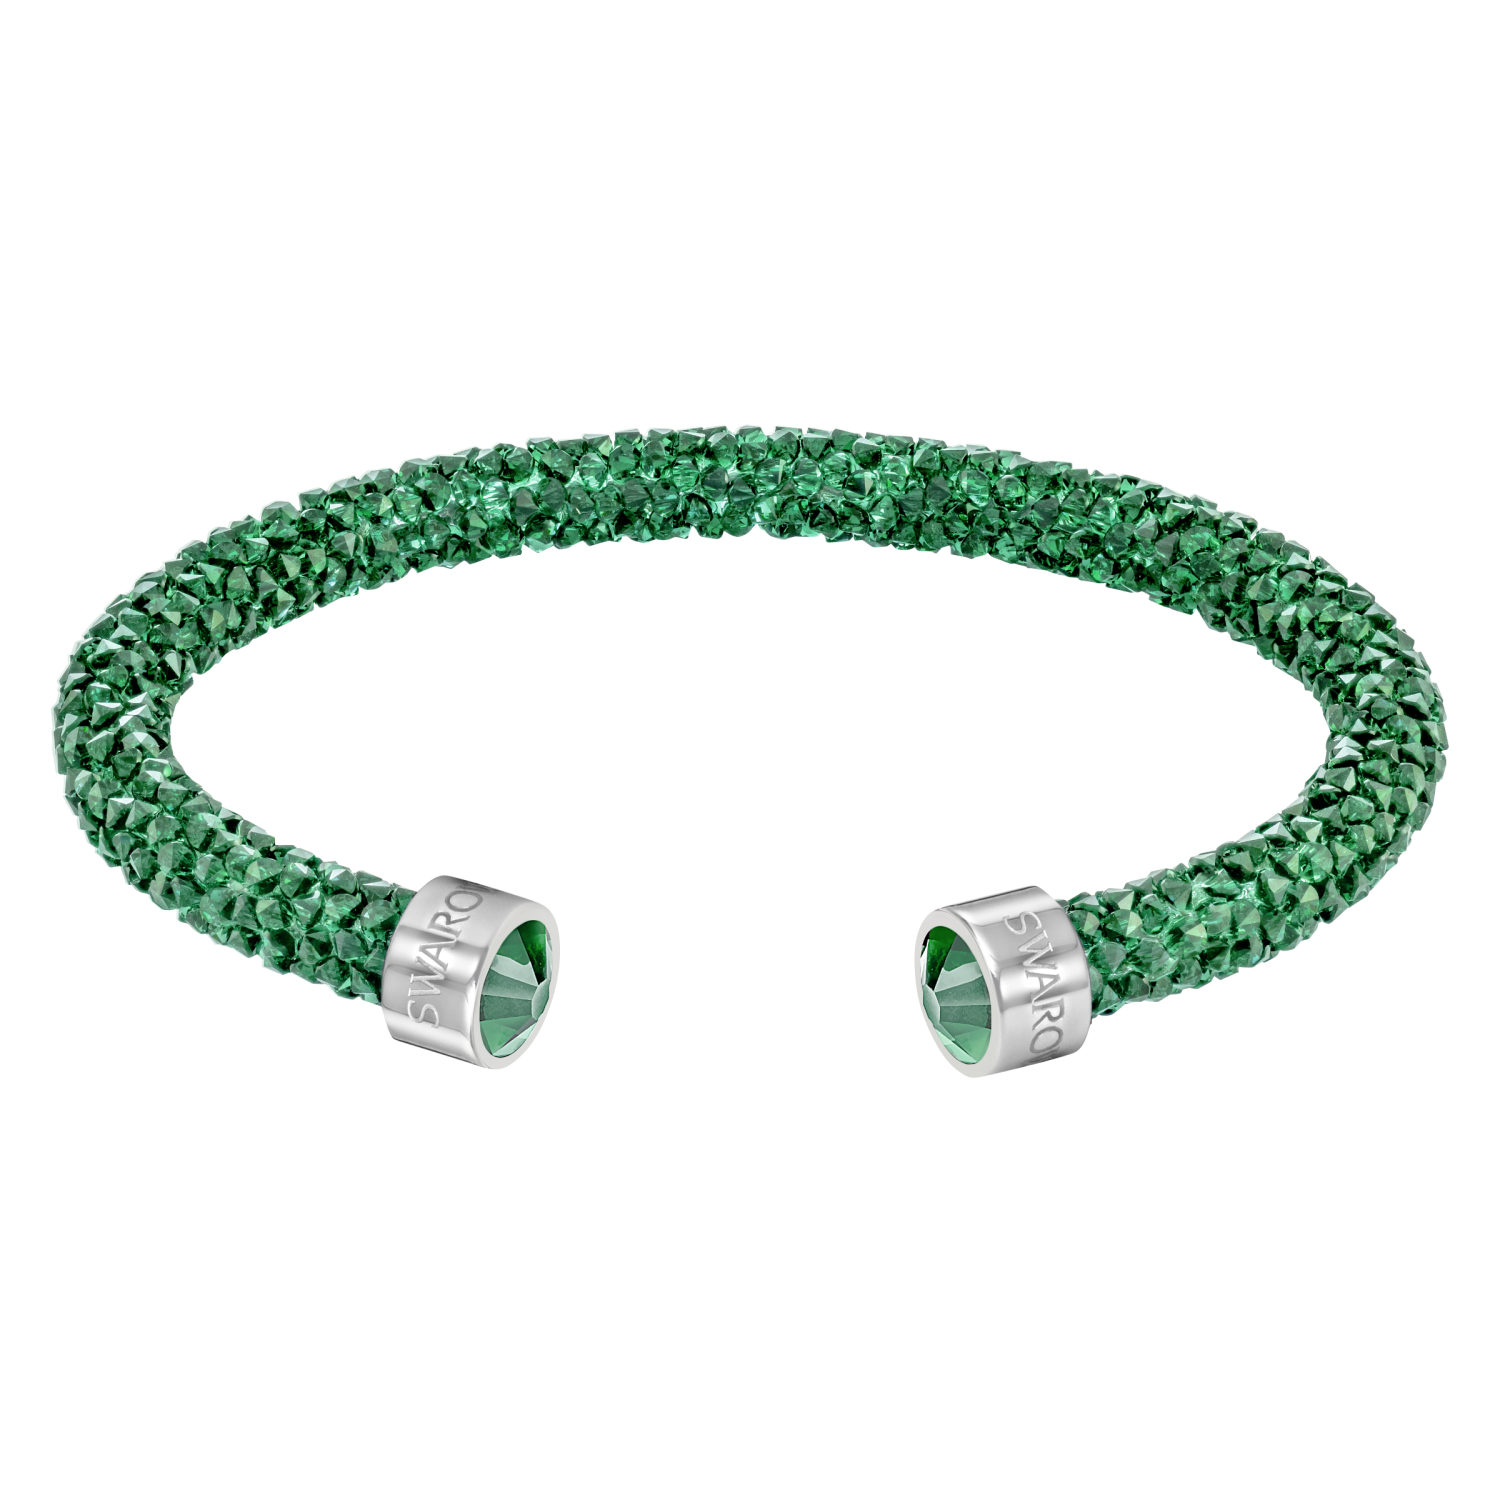 Swarovski - Bracciale rigido Crystaldust, verde, acciaio inossidabile Ref. 5292919 - SWAROVSKI